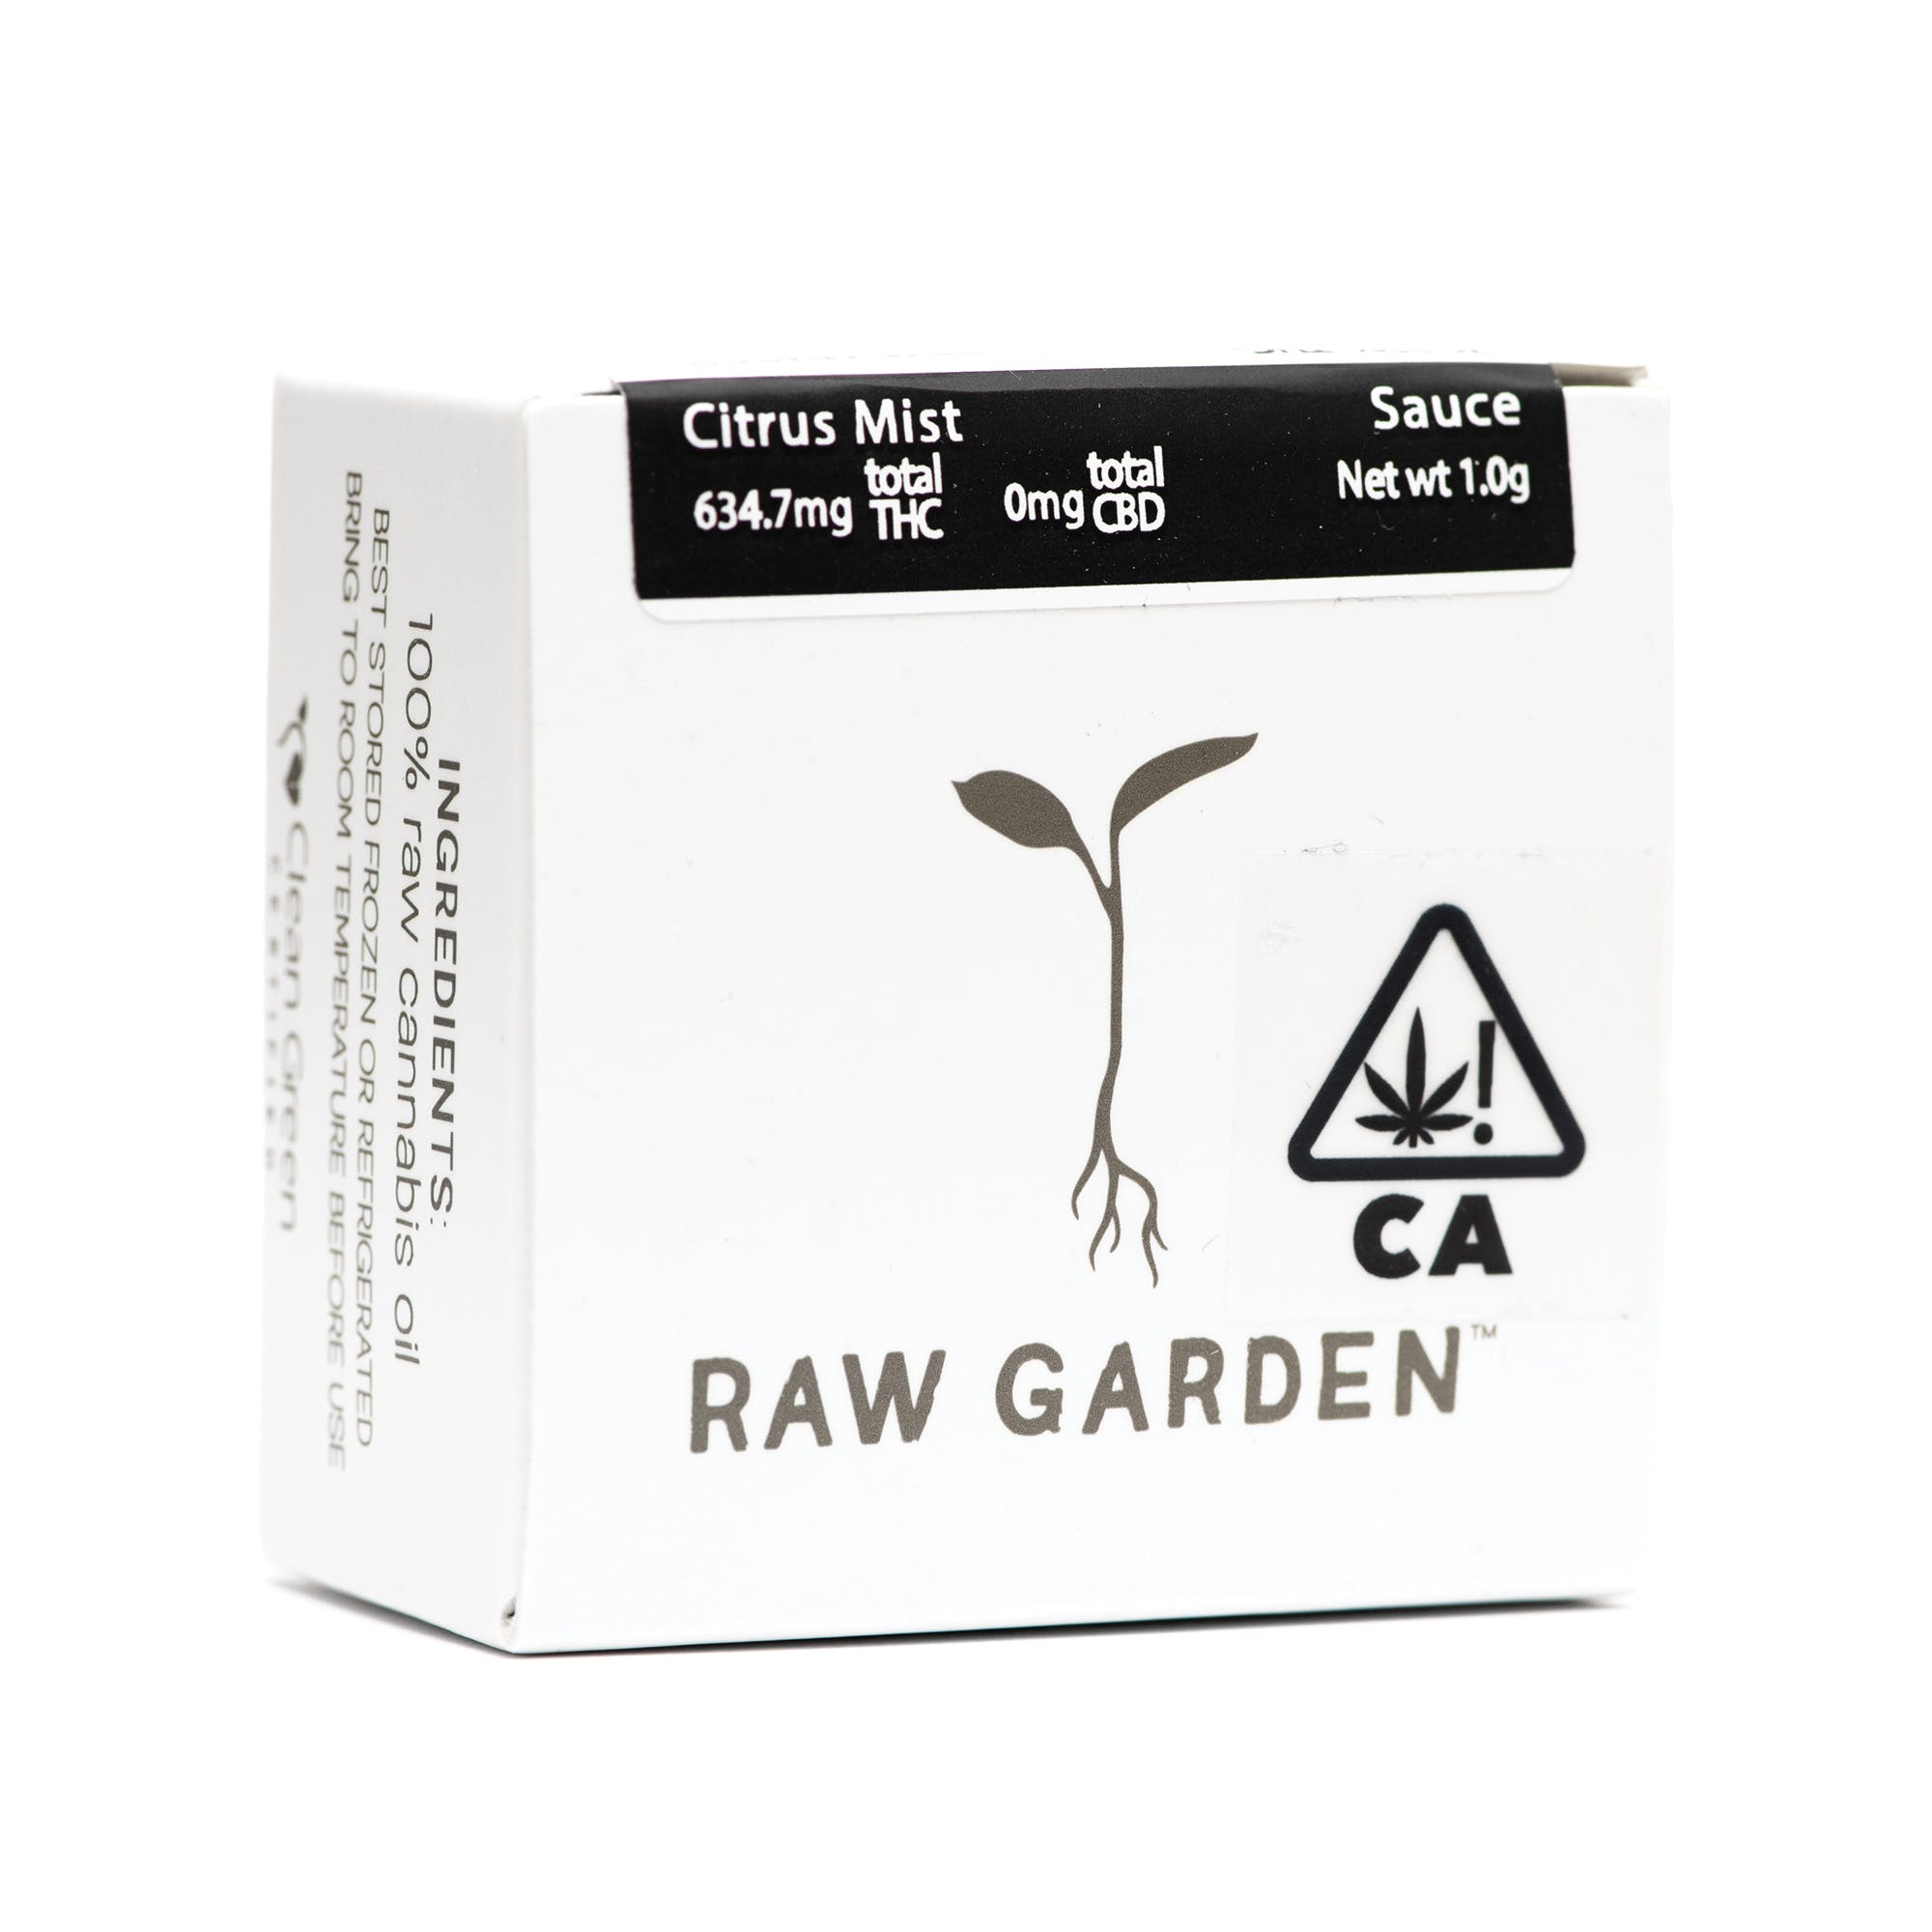 Medical/Online(21+) Raw Garden Citrus Mist Sauce